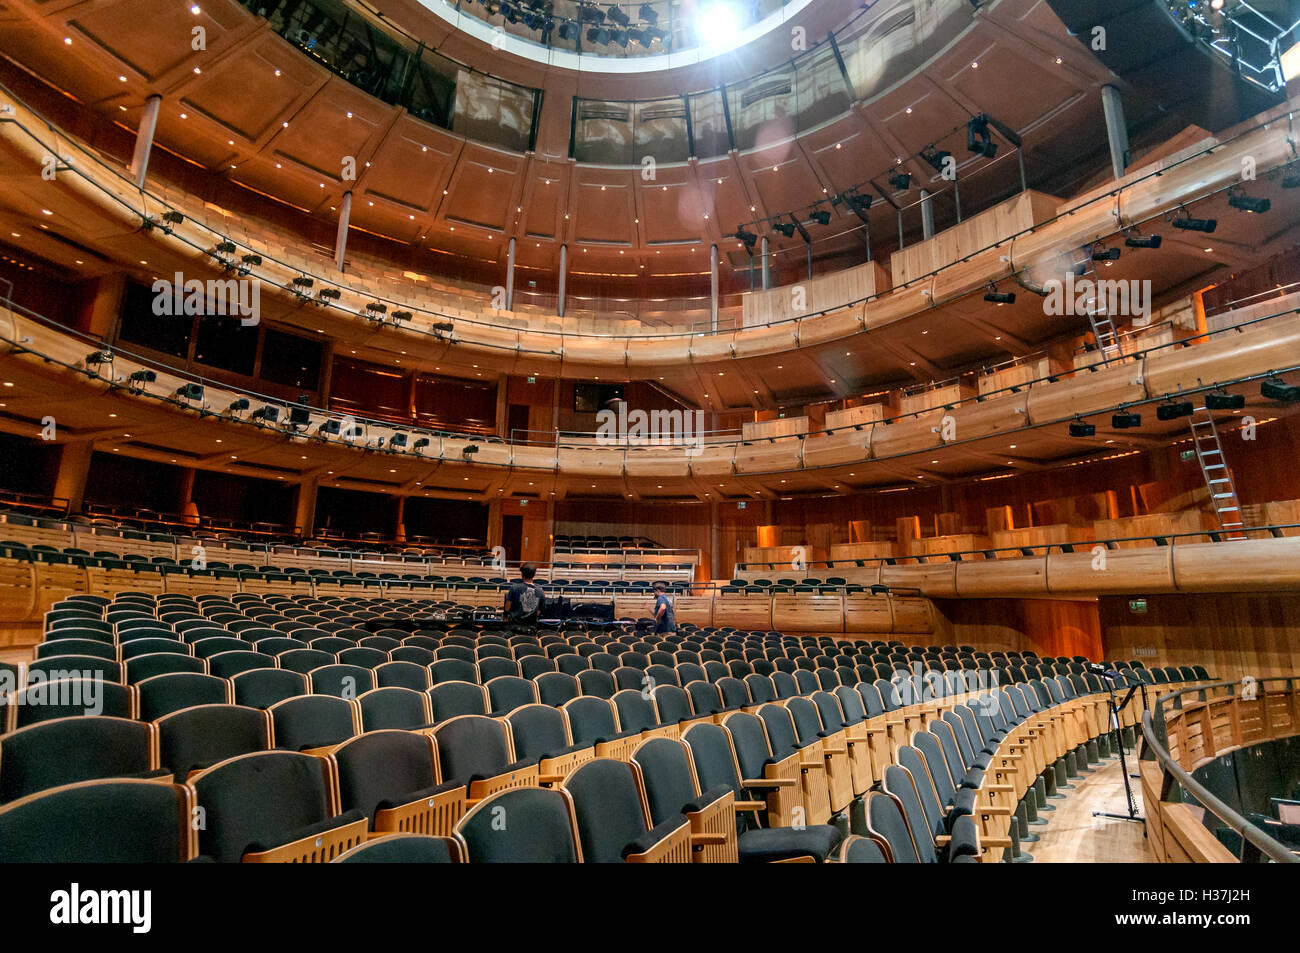 Inside the auditorium at Glyndebourne Festival Opera Stock Photo